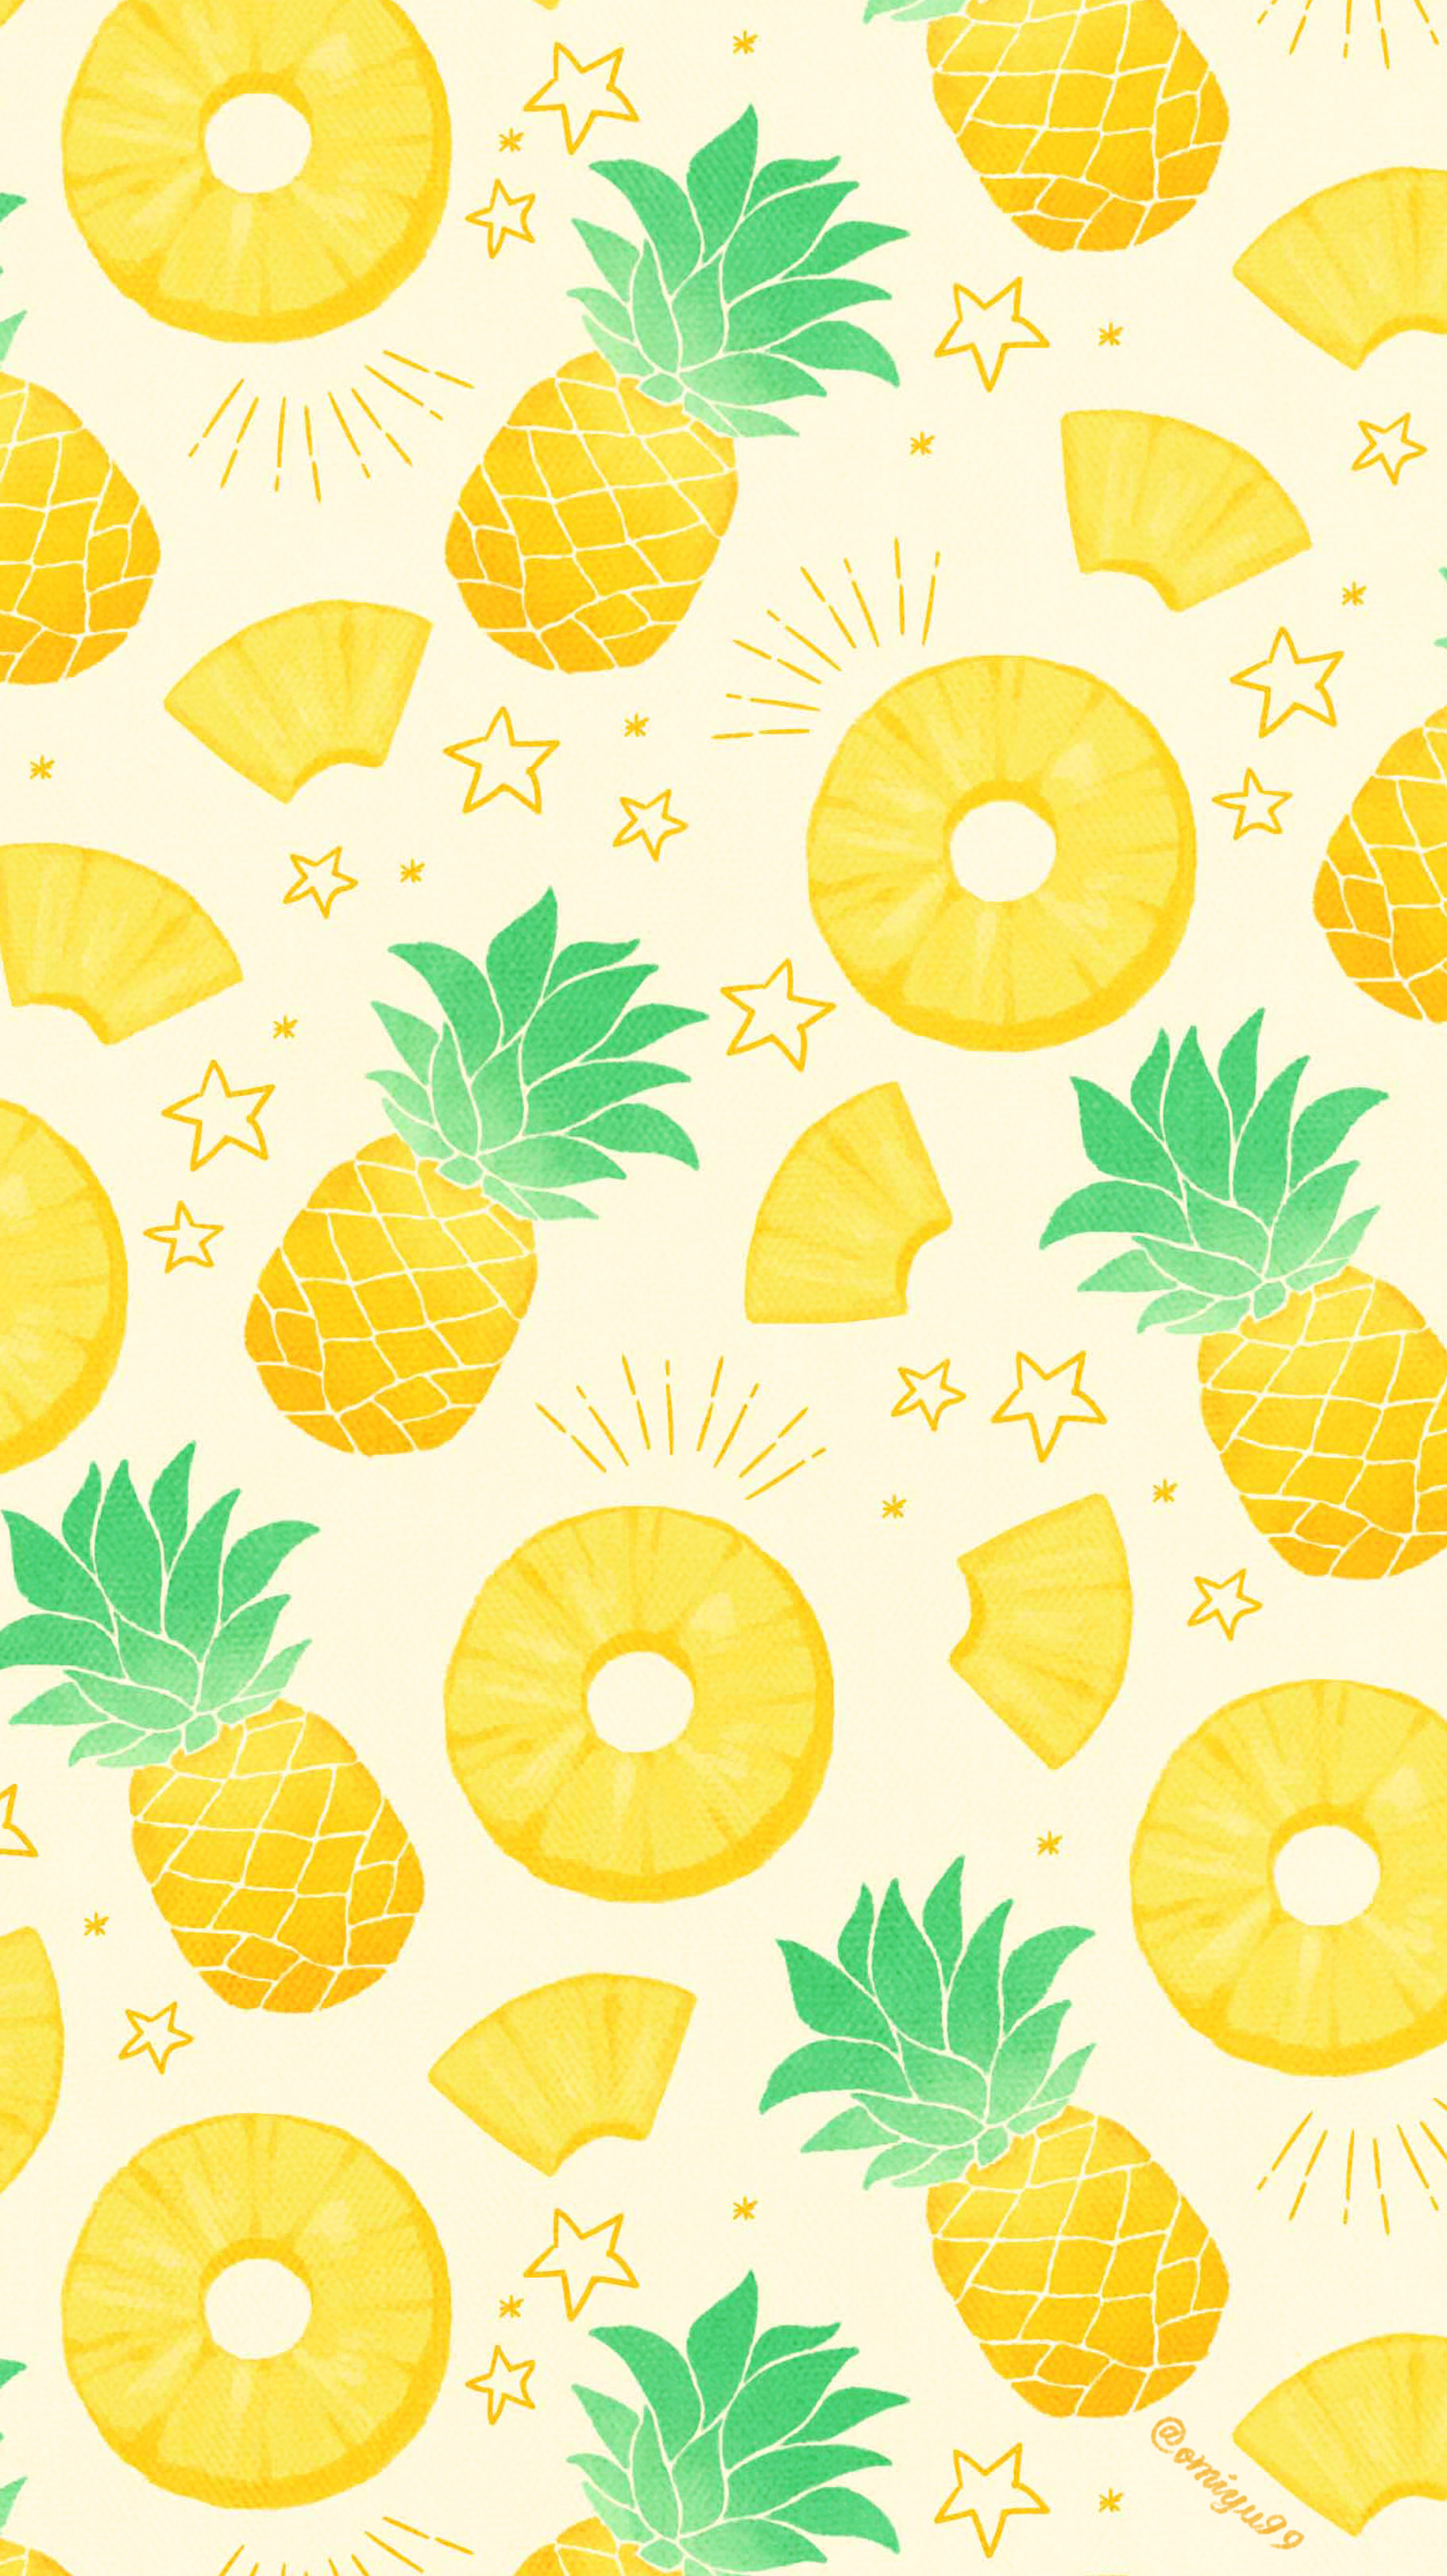 توییتر Omiyu در توییتر パイナップルな壁紙 Illust Illustration 壁紙 イラスト Iphone壁紙 パイナップル Pineapple 食べ物 T Co 1fjxufeal6